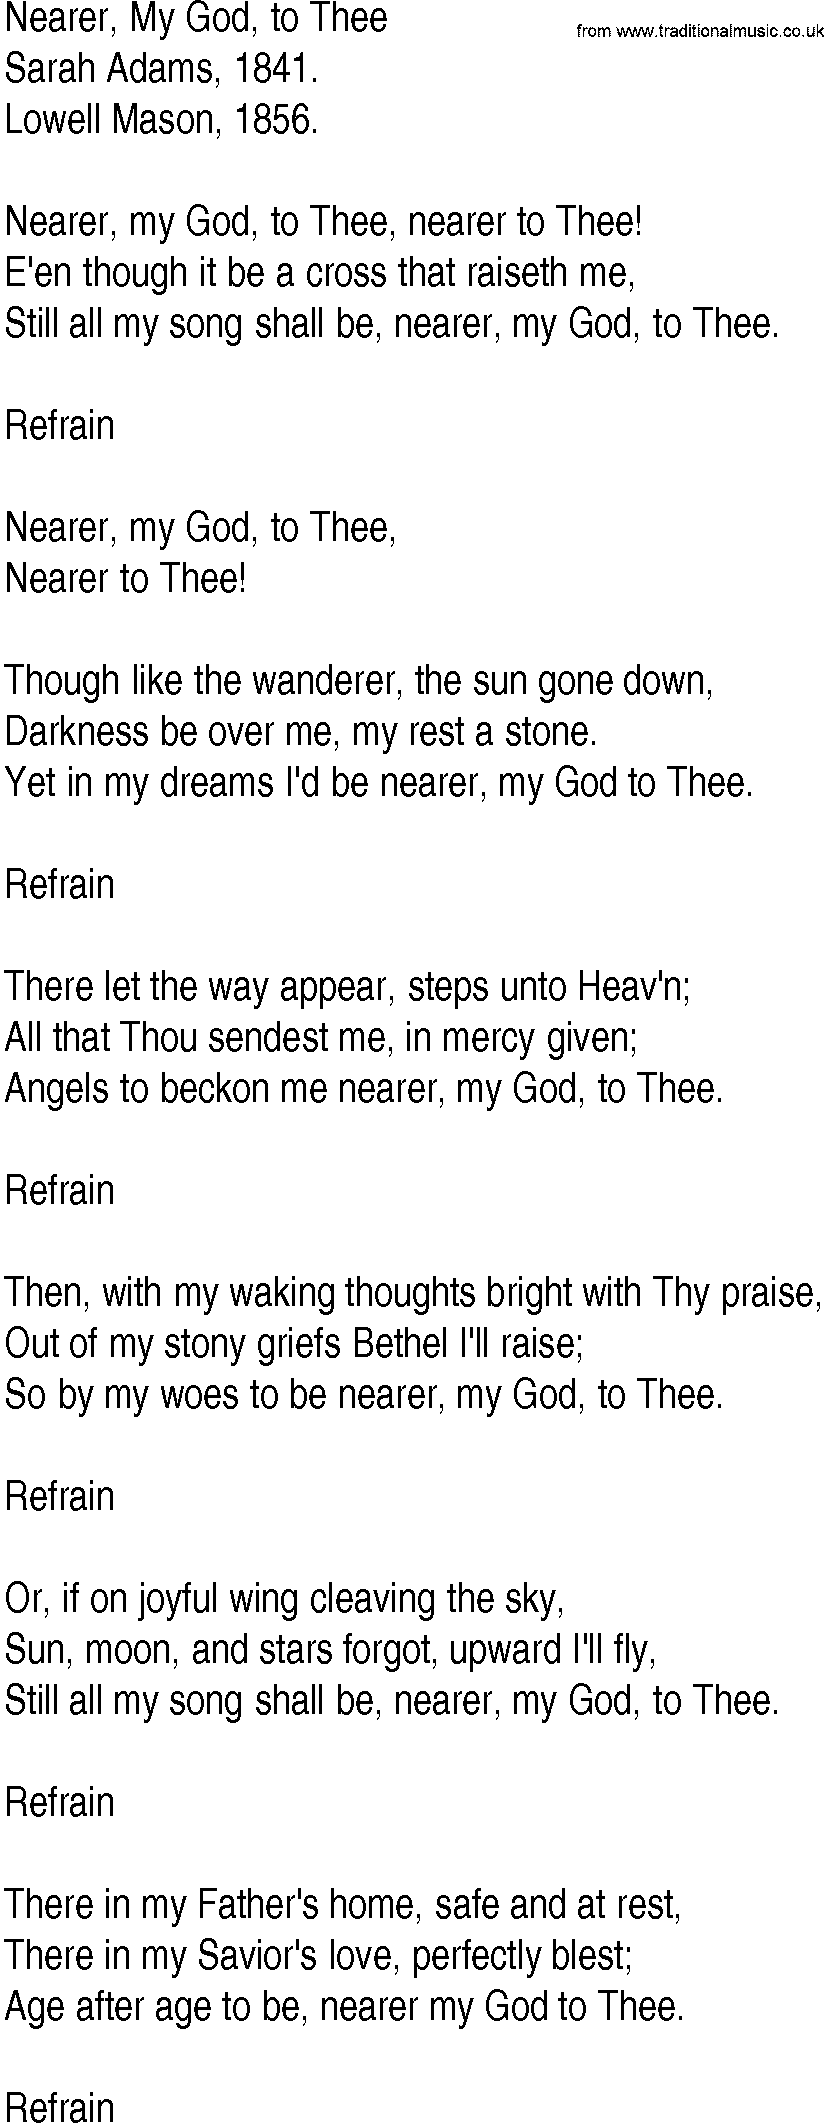 Hymn and Gospel Song: Nearer, My God, to Thee by Sarah Adams lyrics